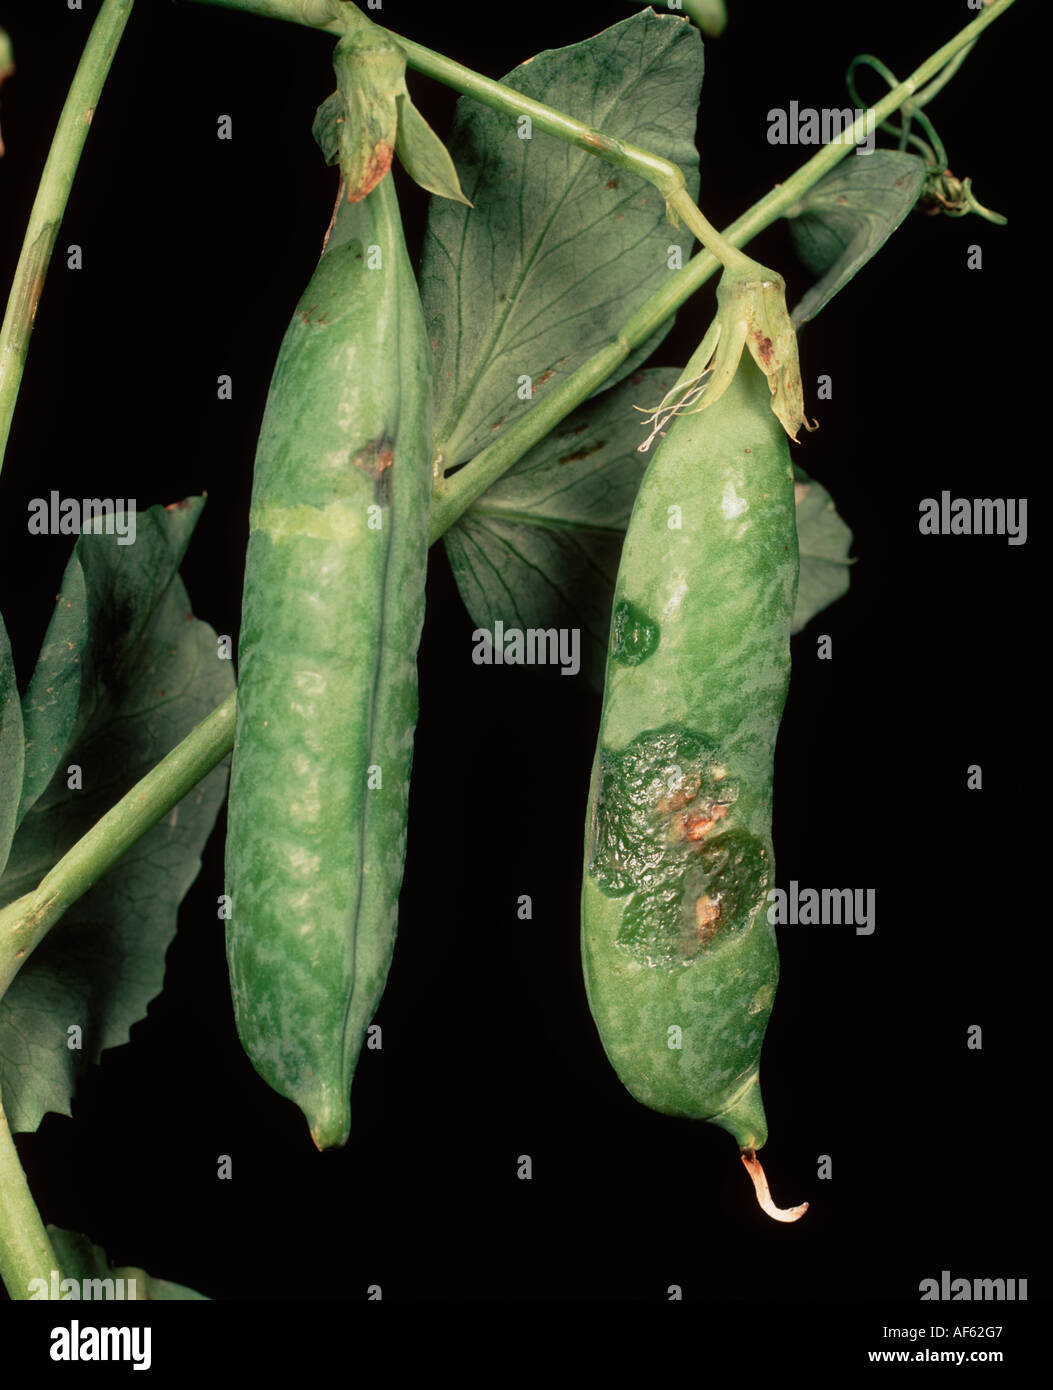 Bacterial blight Pseudomonas syringae lesions and damage to pea pod Stock Photo